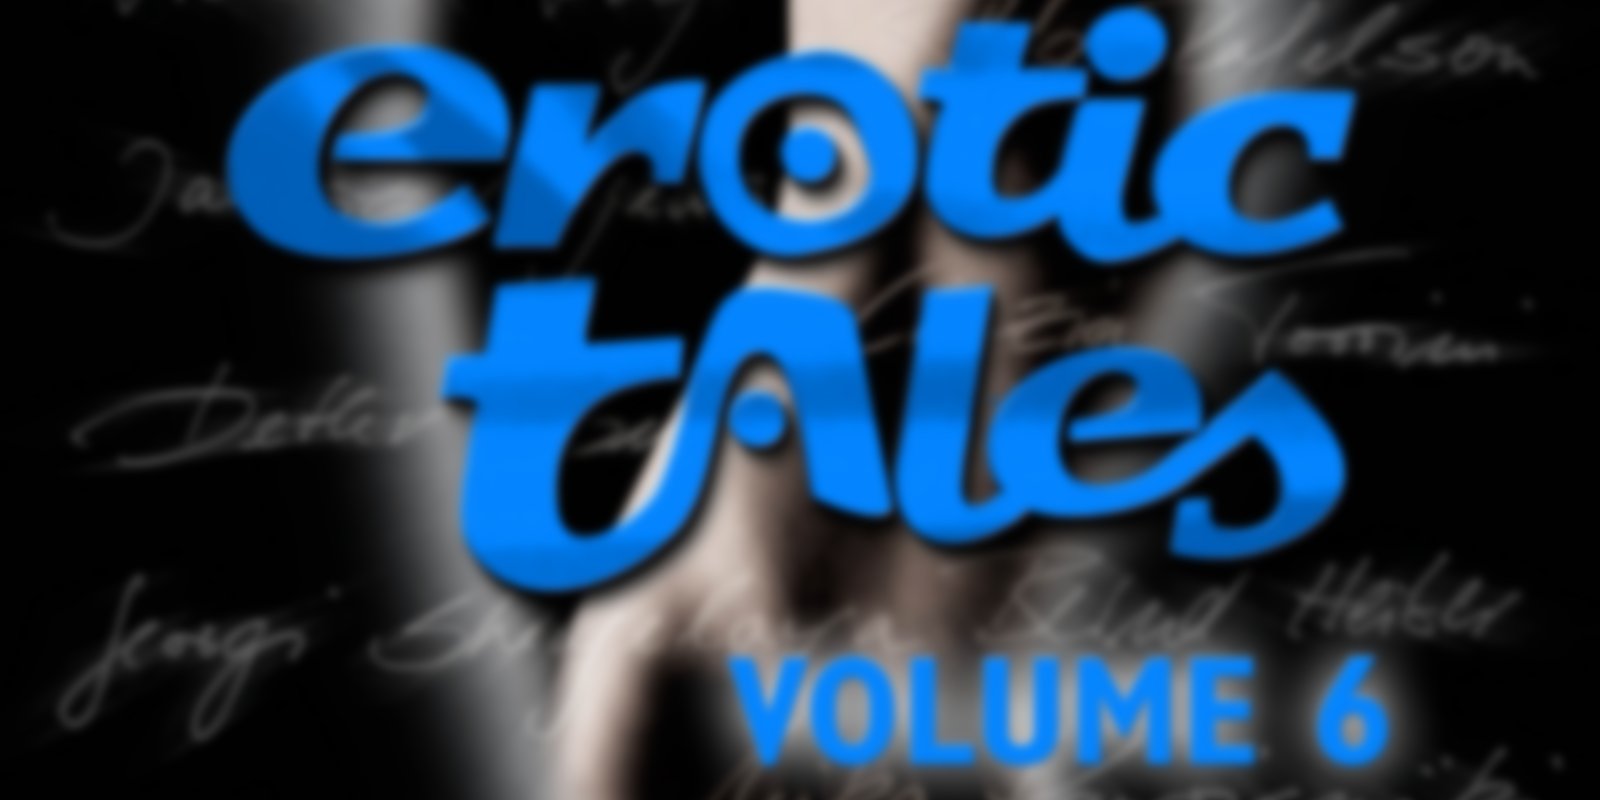 Erotic Tales - Volume 6